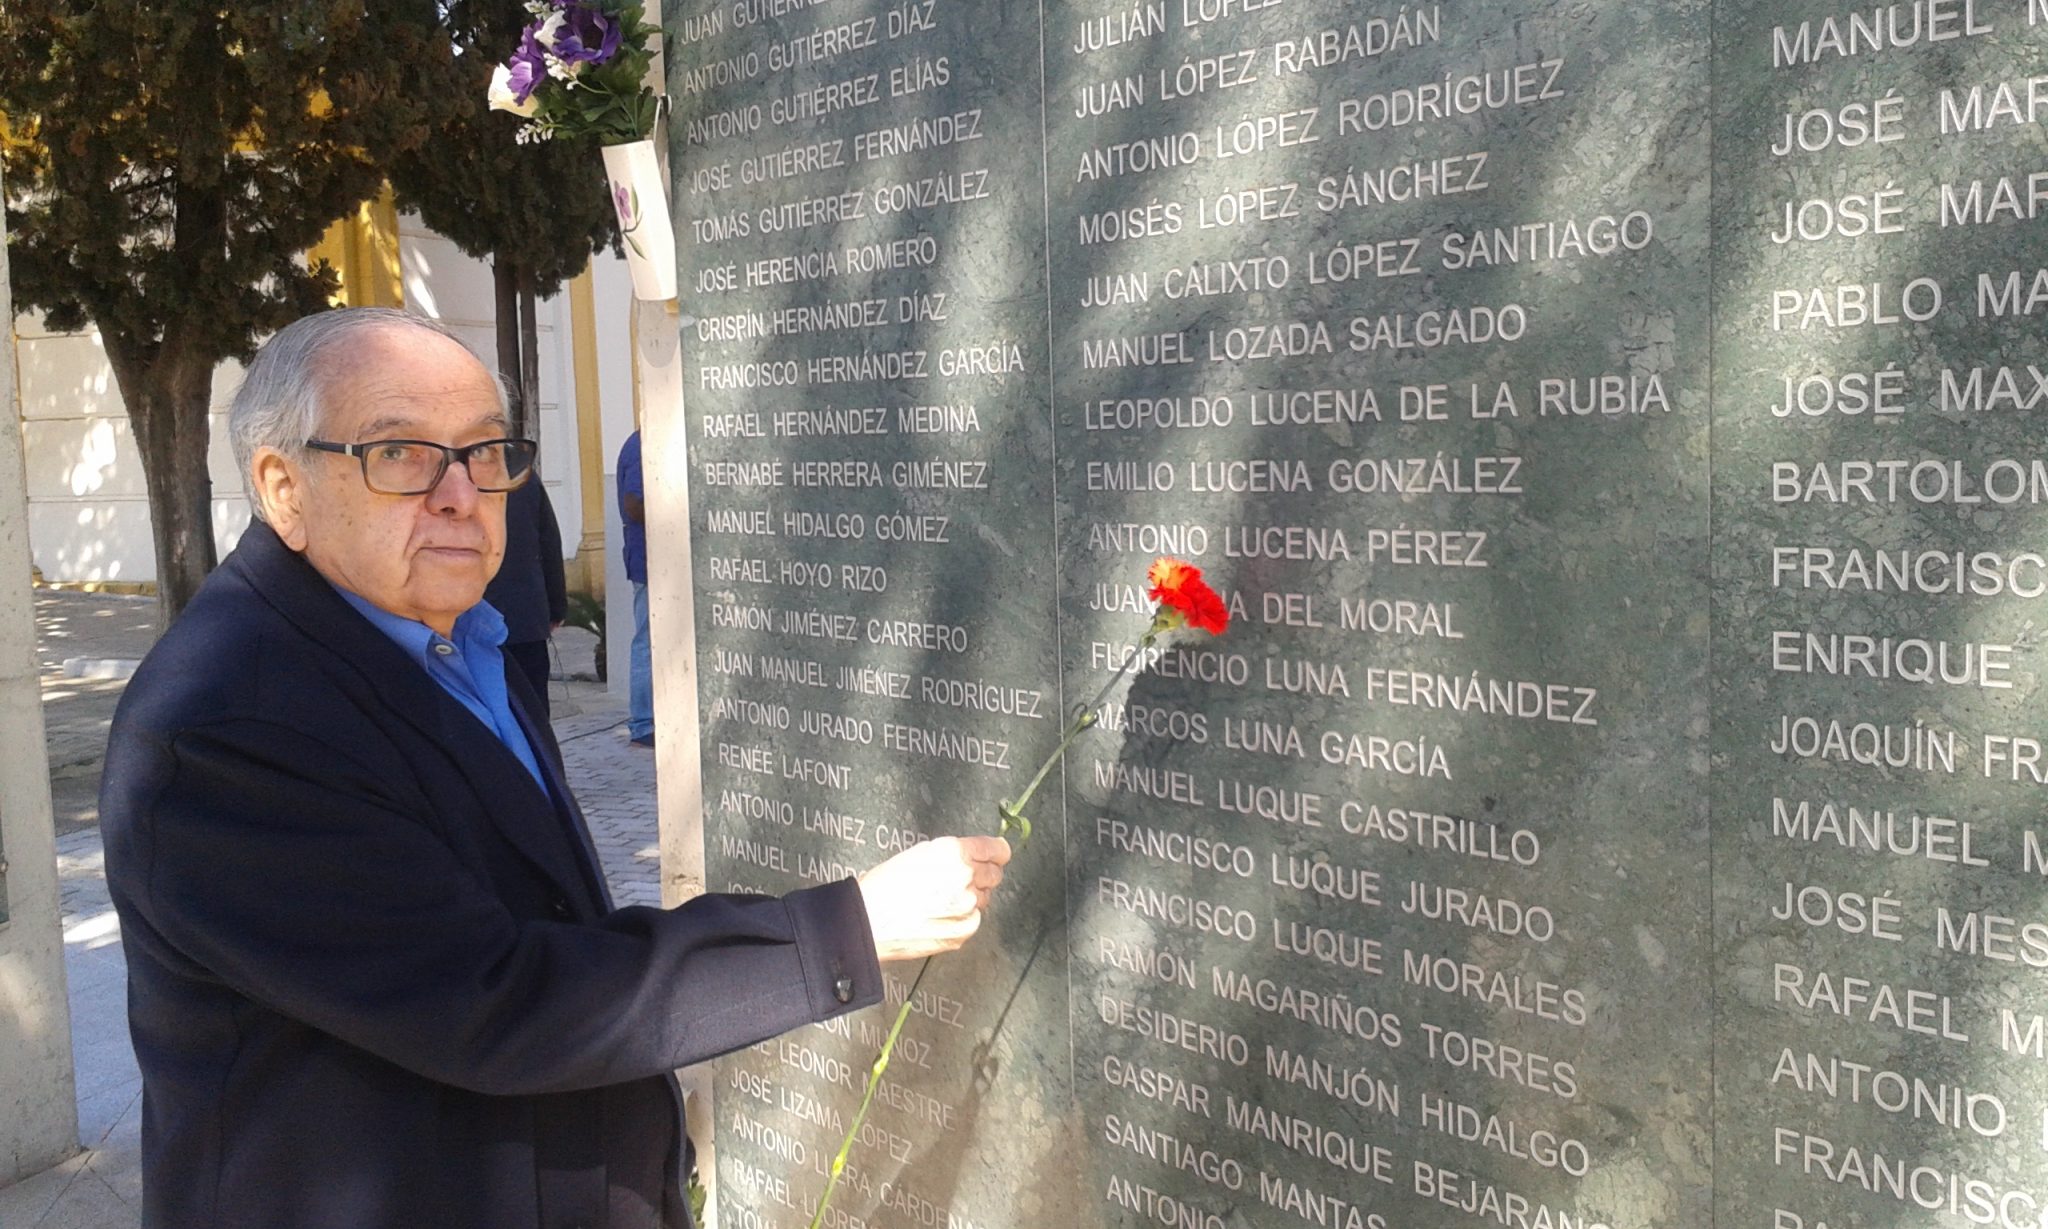 Testimonio de Antonio Lucena Ruiz: “A mis 88 años, sigo sin poder enterrar a mi padre”